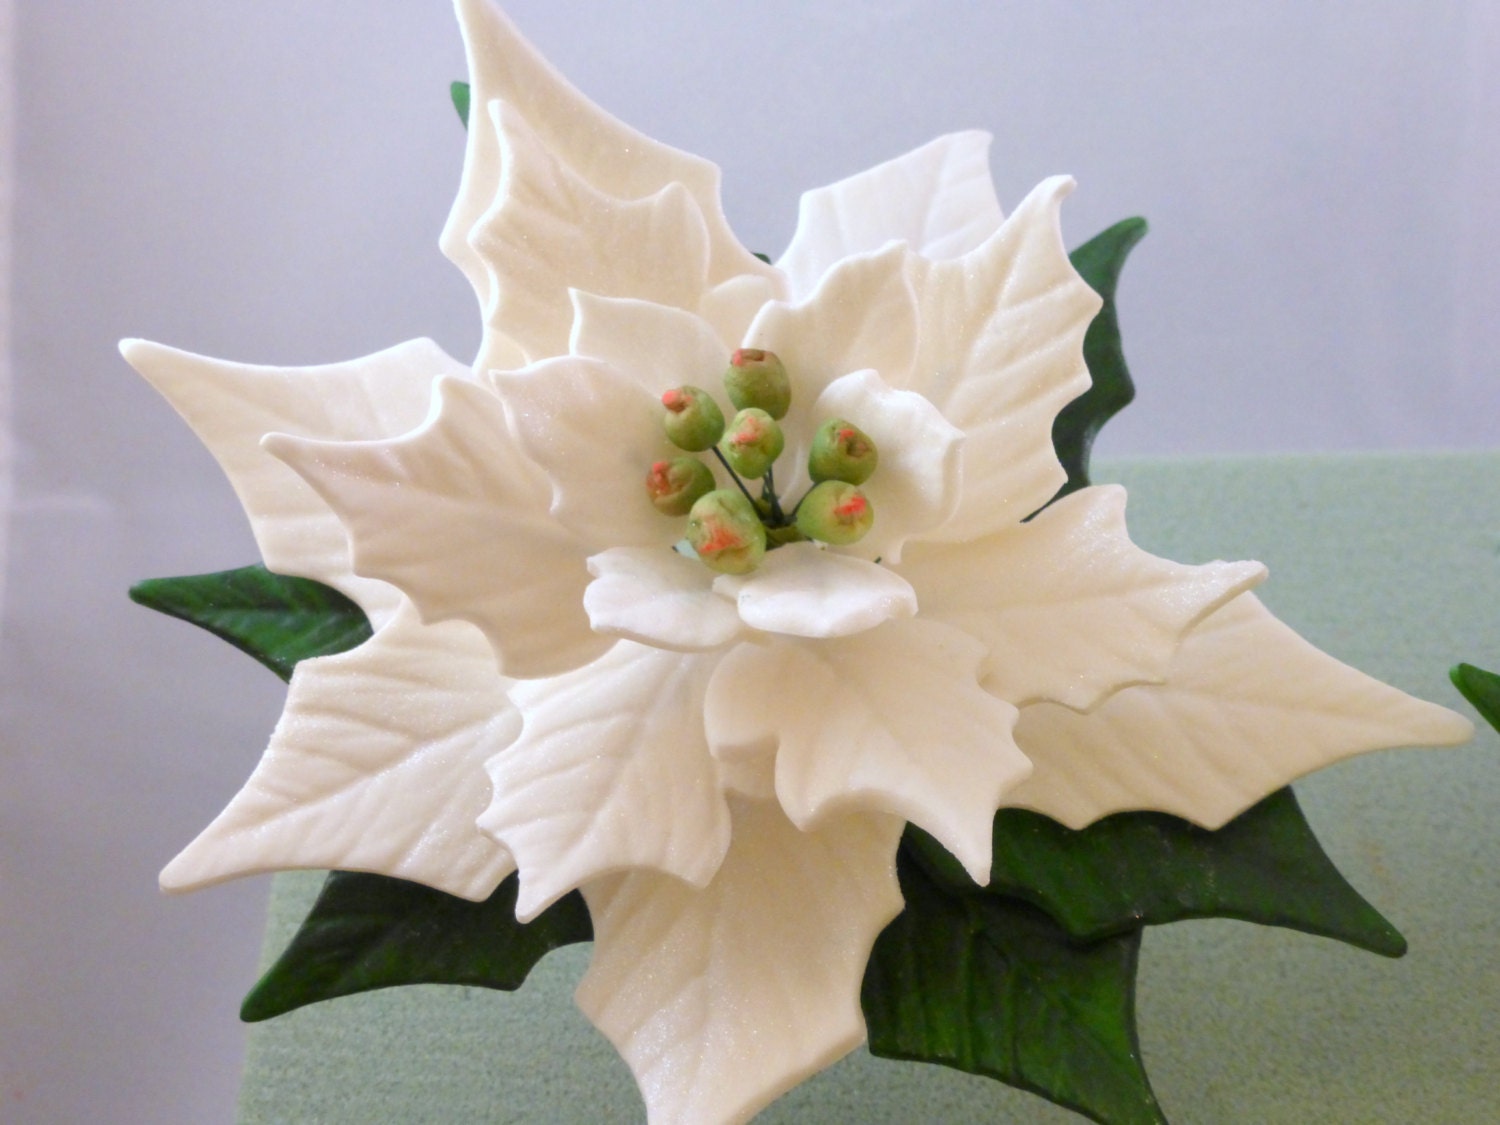 1 white gumpaste poinsettia Christmas flower by GoodnessCakes